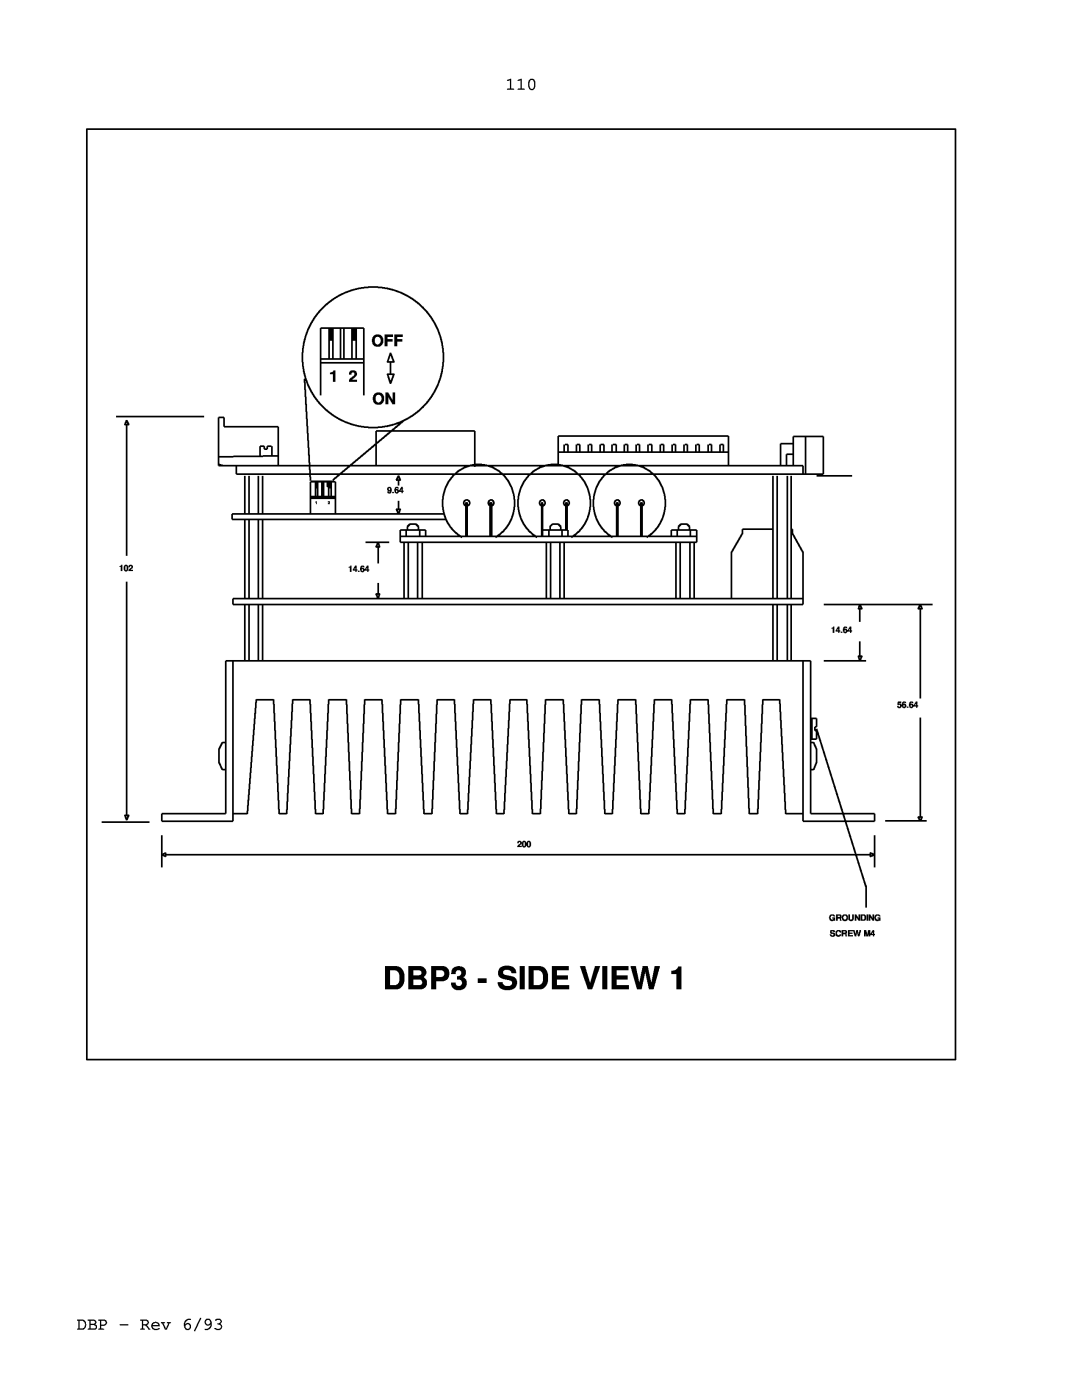 Elmo DBP SERIES manual DBP3 - SIDE VIEW, 9.64, 14.64, Grounding, SCREW M4, 56.64 